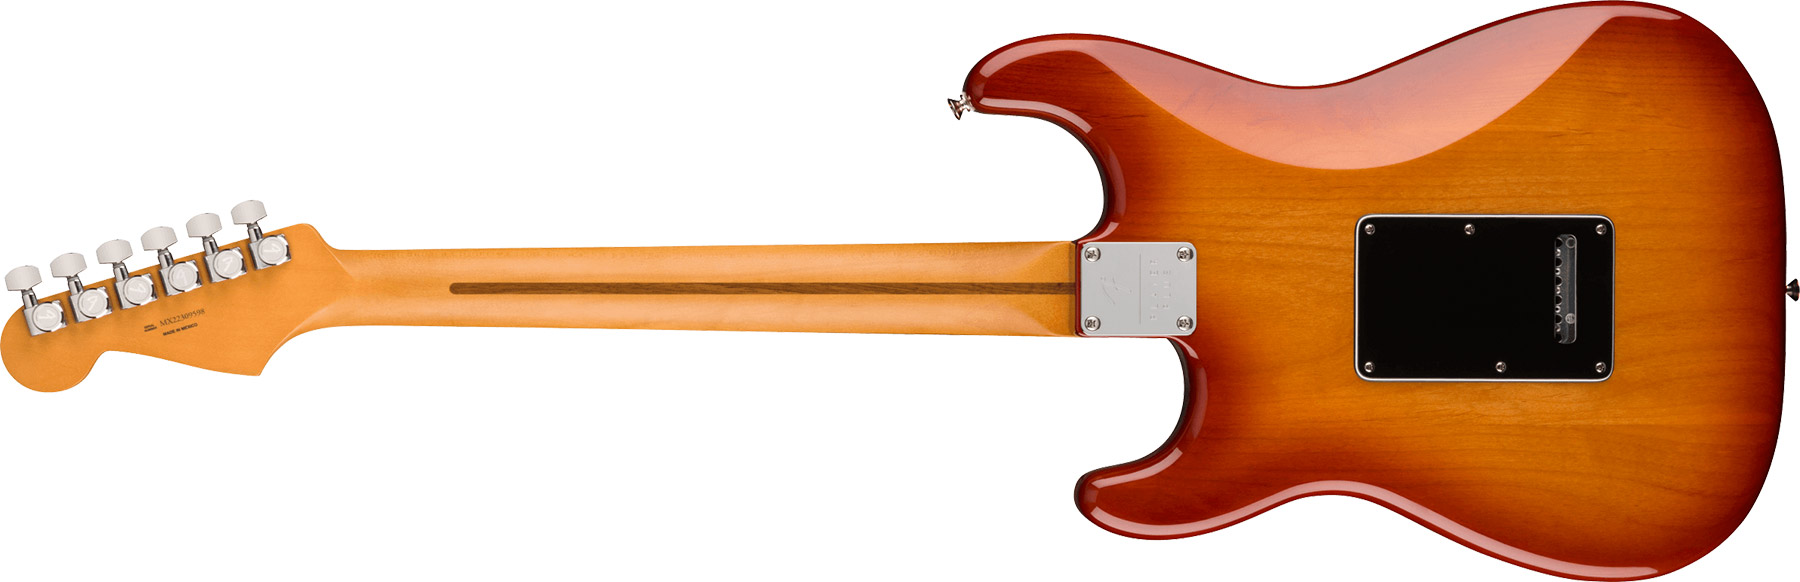 Fender Strat Player Plus Mex 2023 3s Trem Pf - Sienna Sunburst - Str shape electric guitar - Variation 1